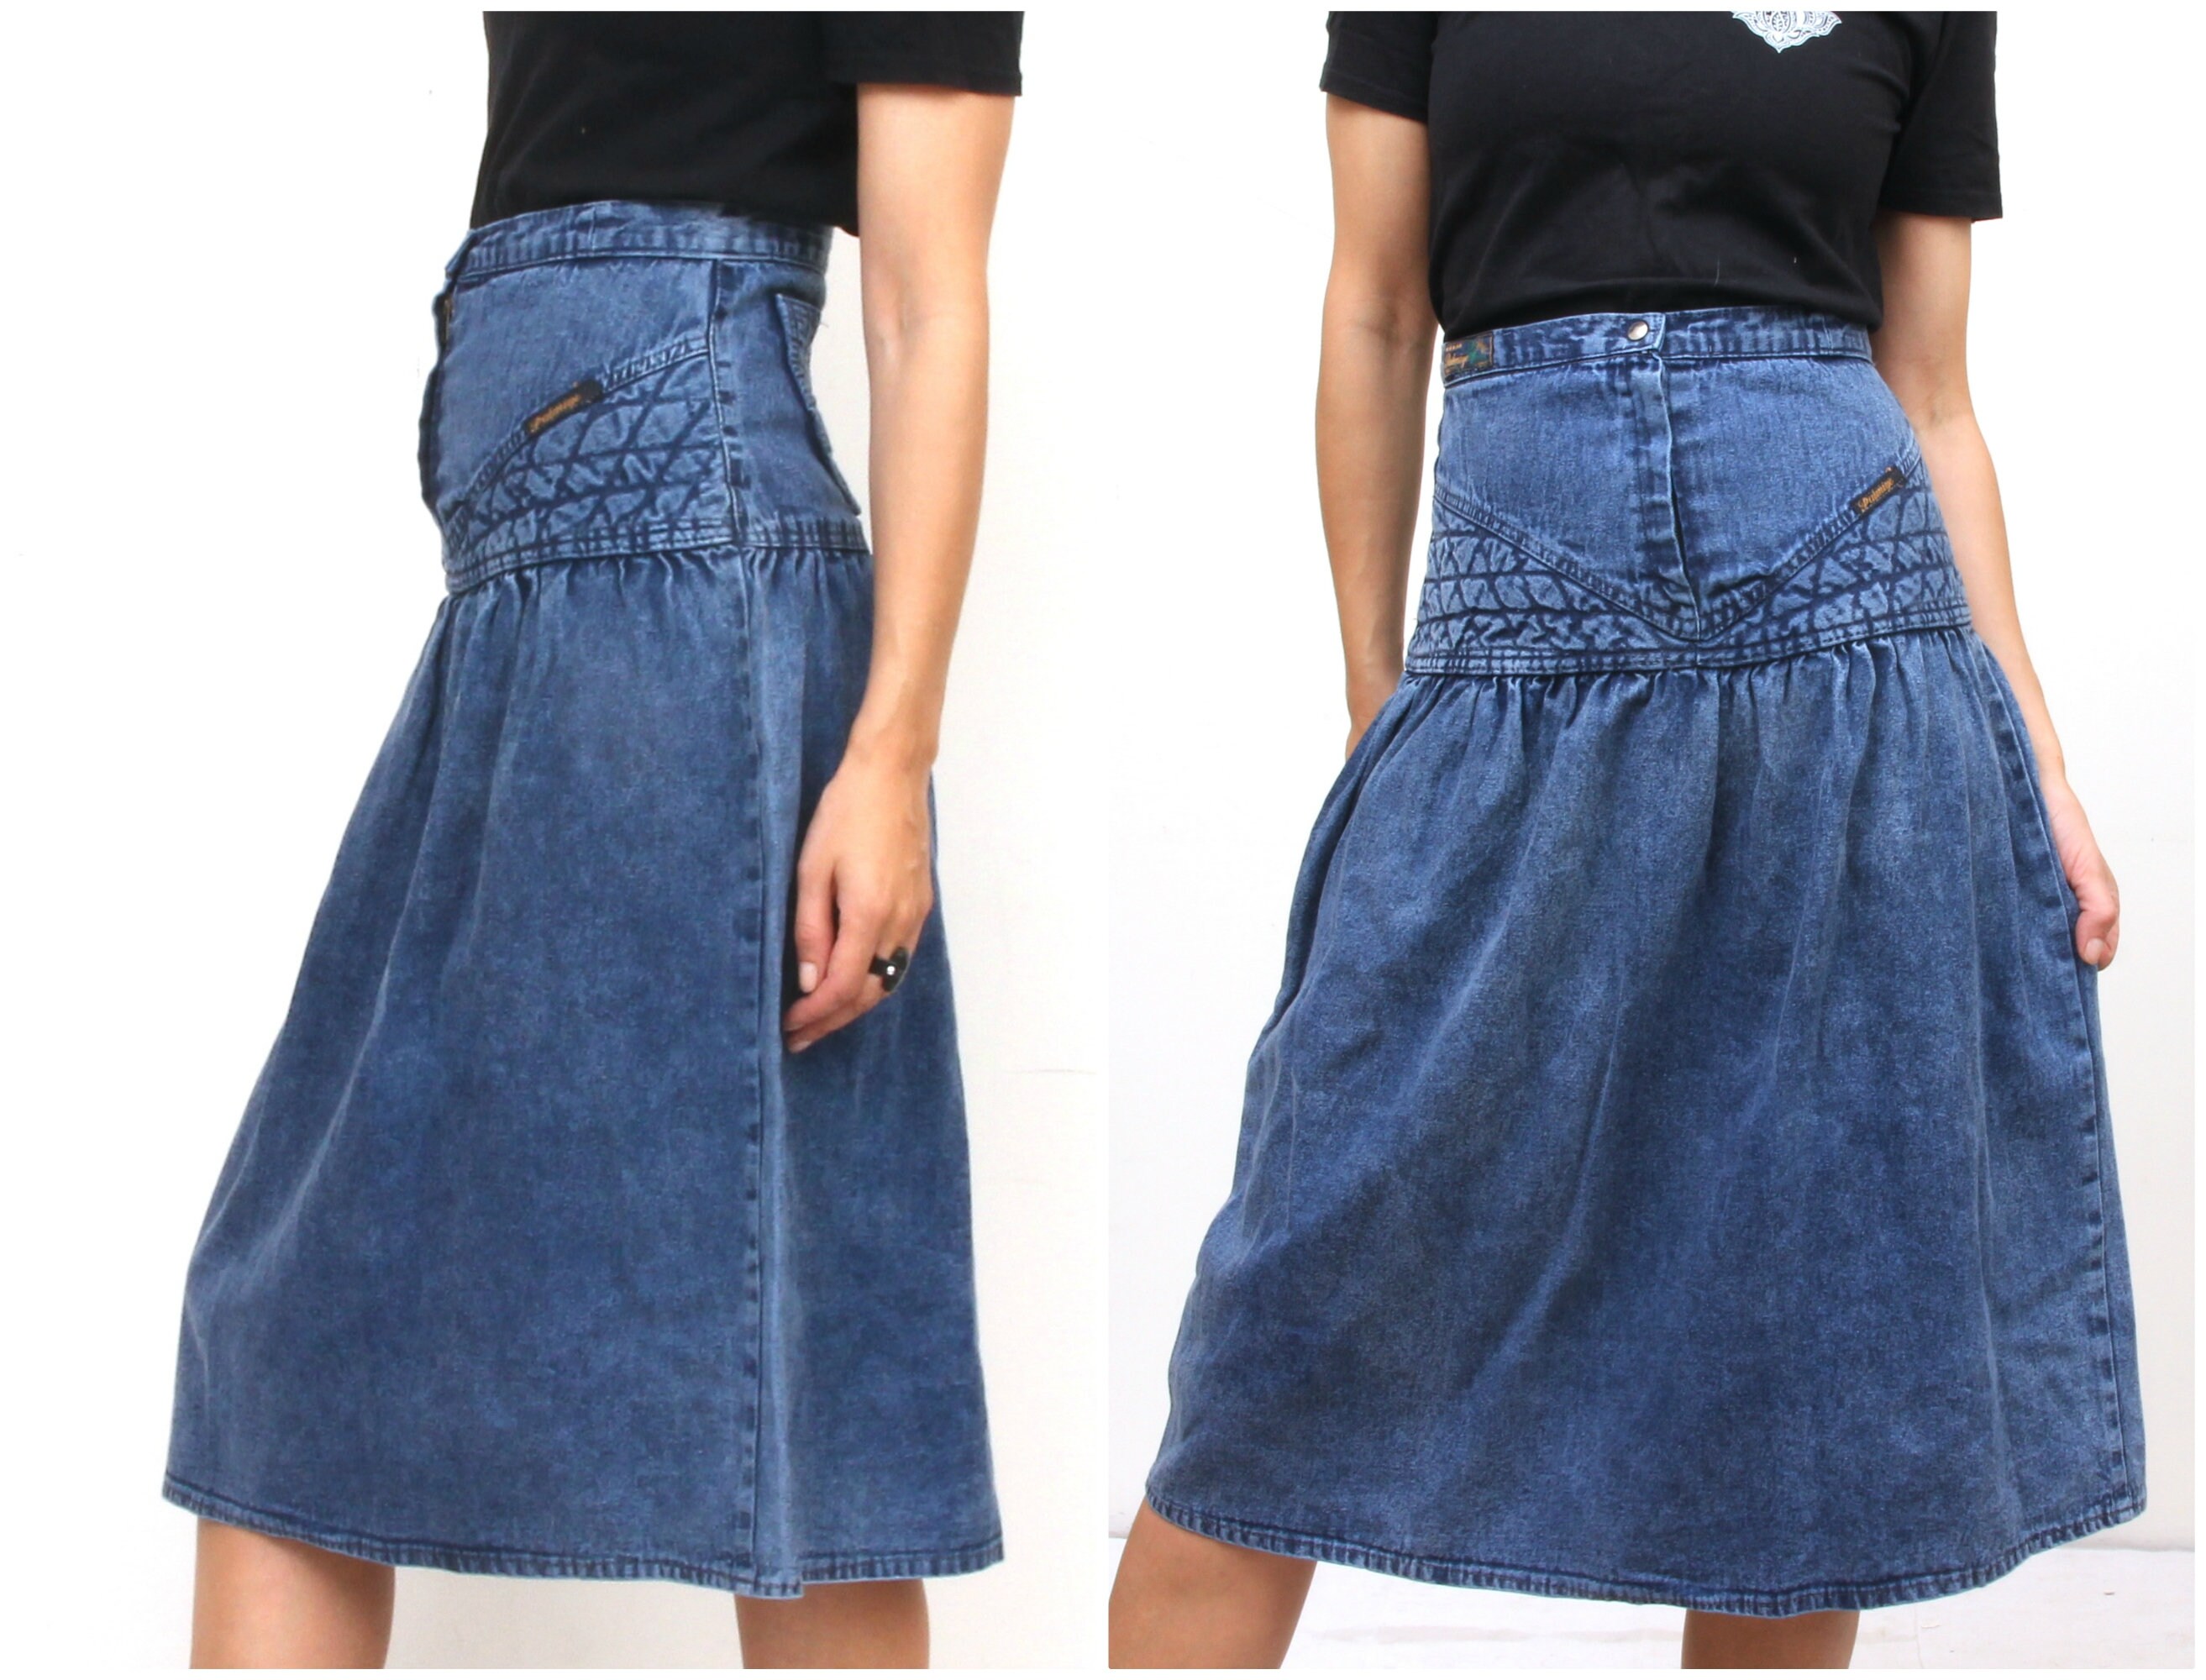 vintage denim skirt